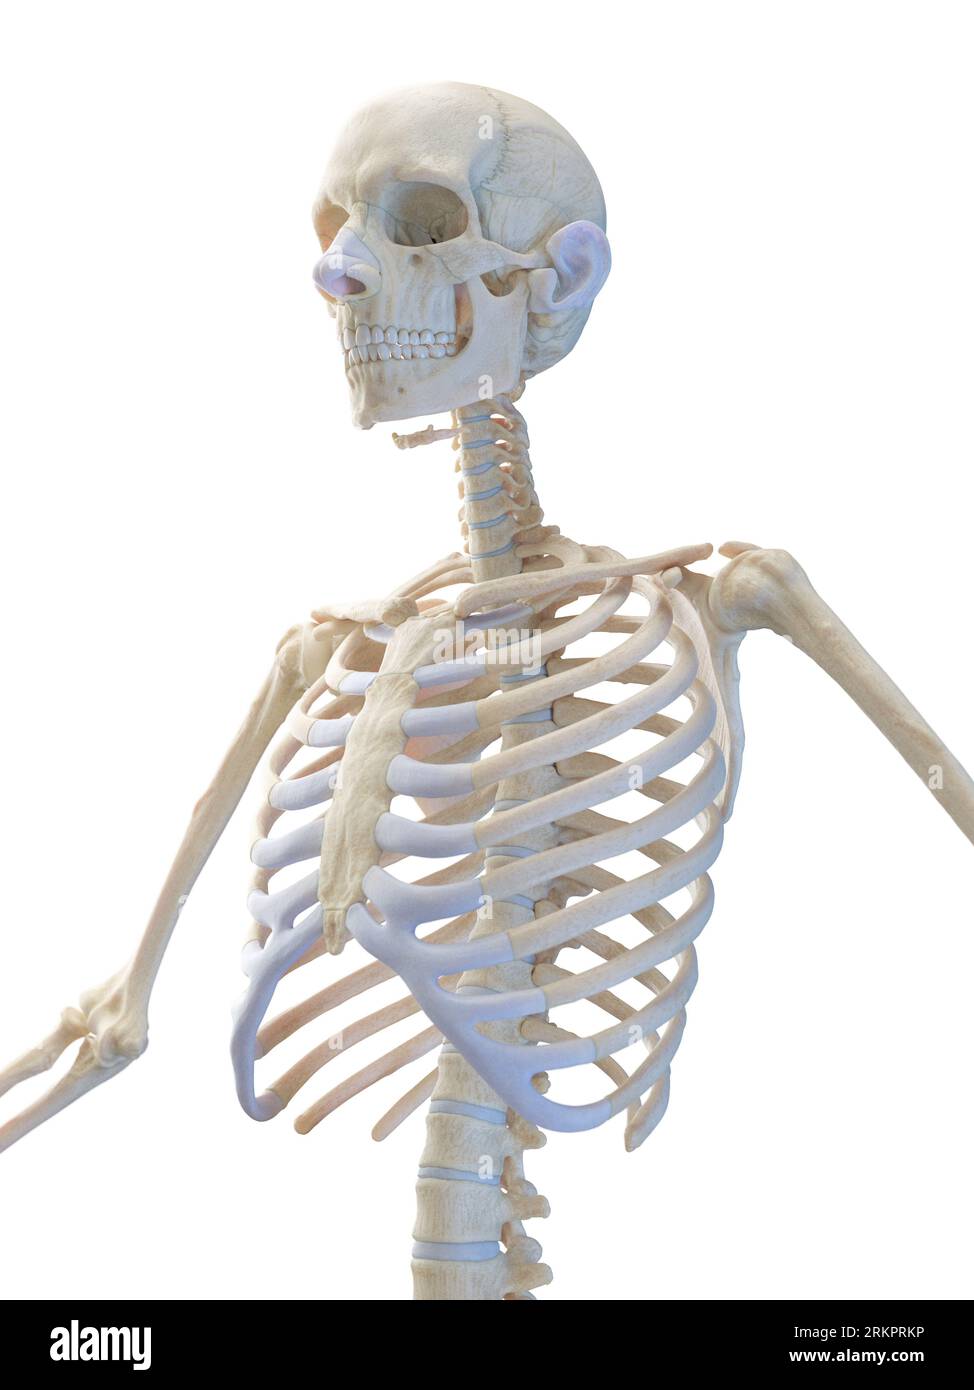 Skeletal system of the upper body, illustration. Stock Photo